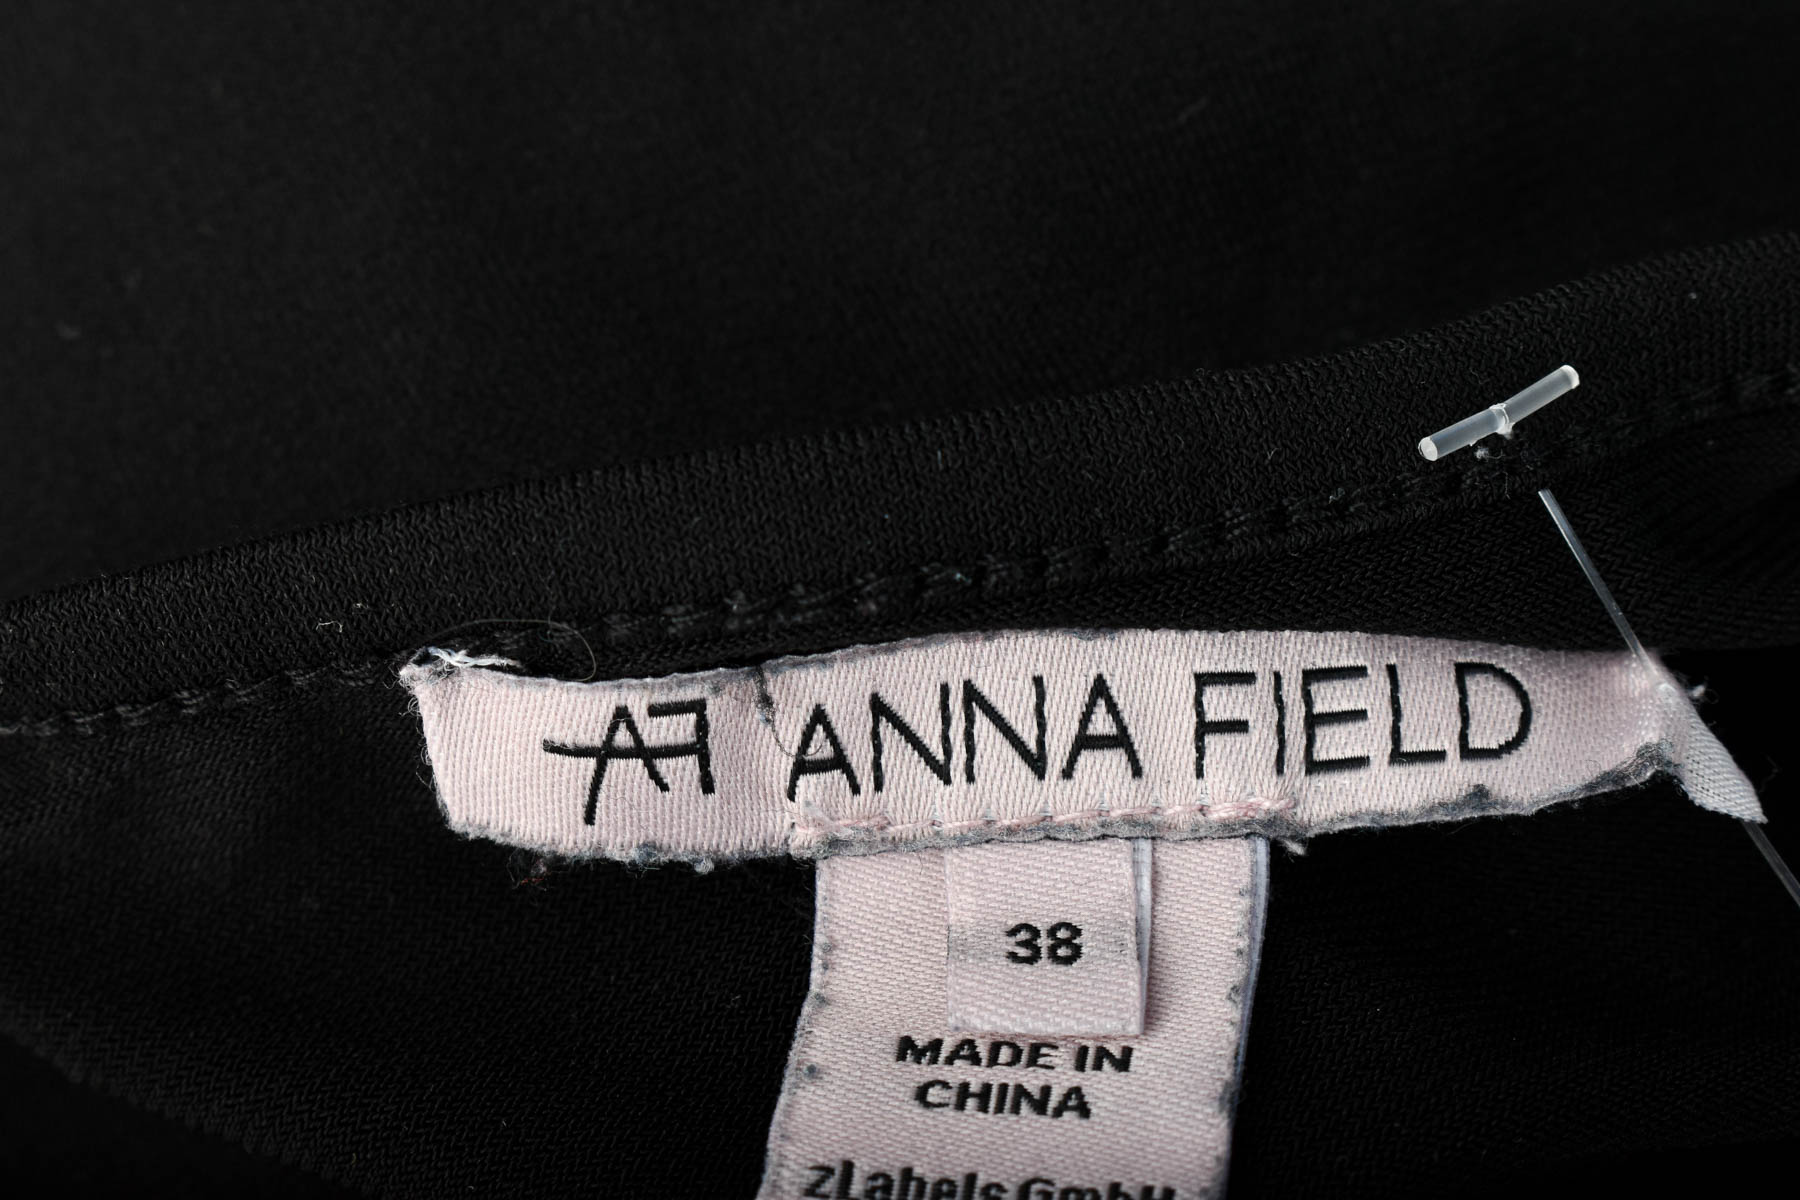 Дамска блуза - ANNA FIELD - 2